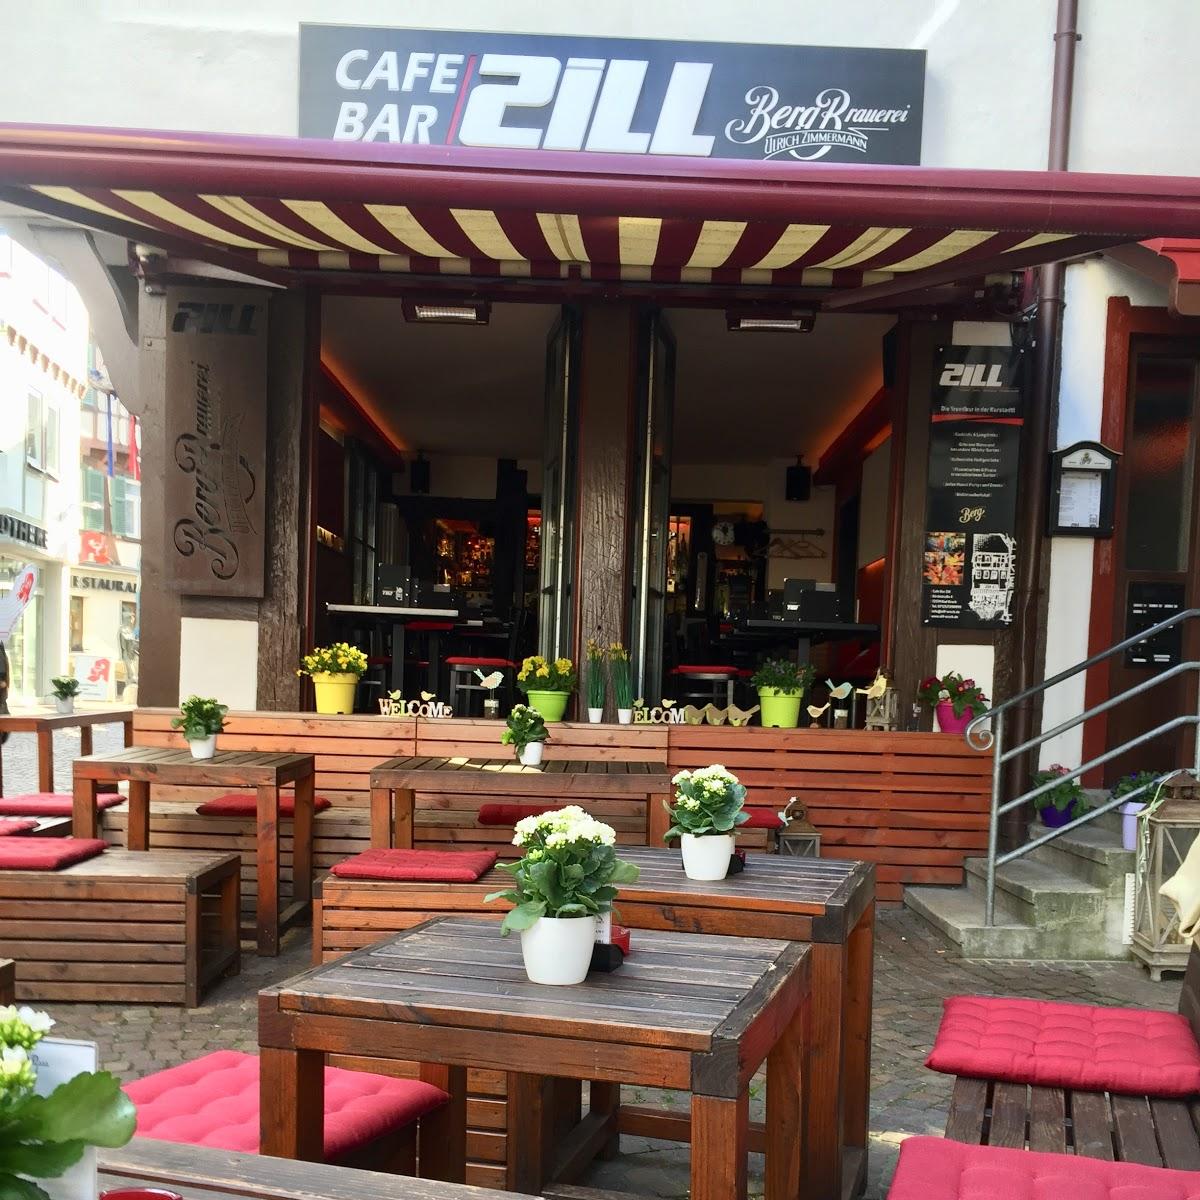 Restaurant "Cafe Bar Zill" in Bad Urach